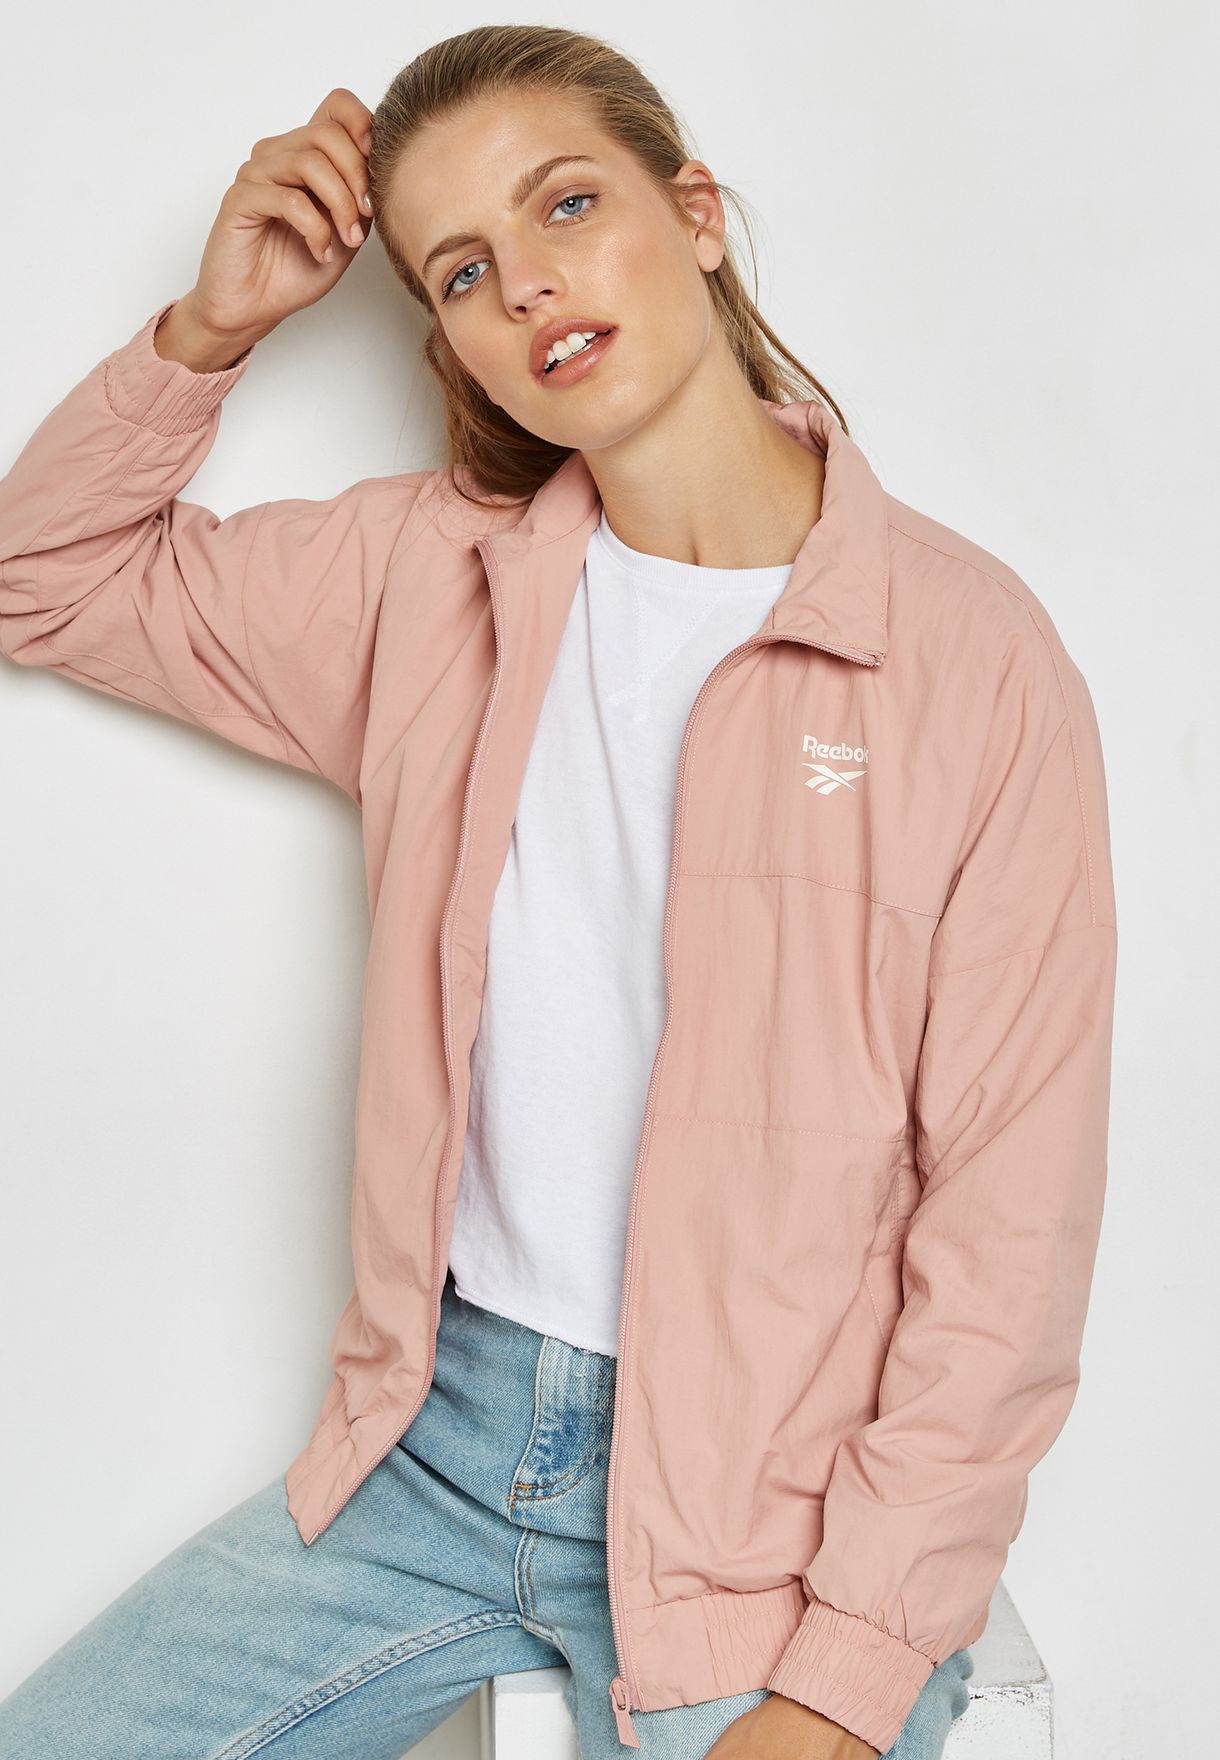 Buy Reebok Pink Lf Vector Jacket for 